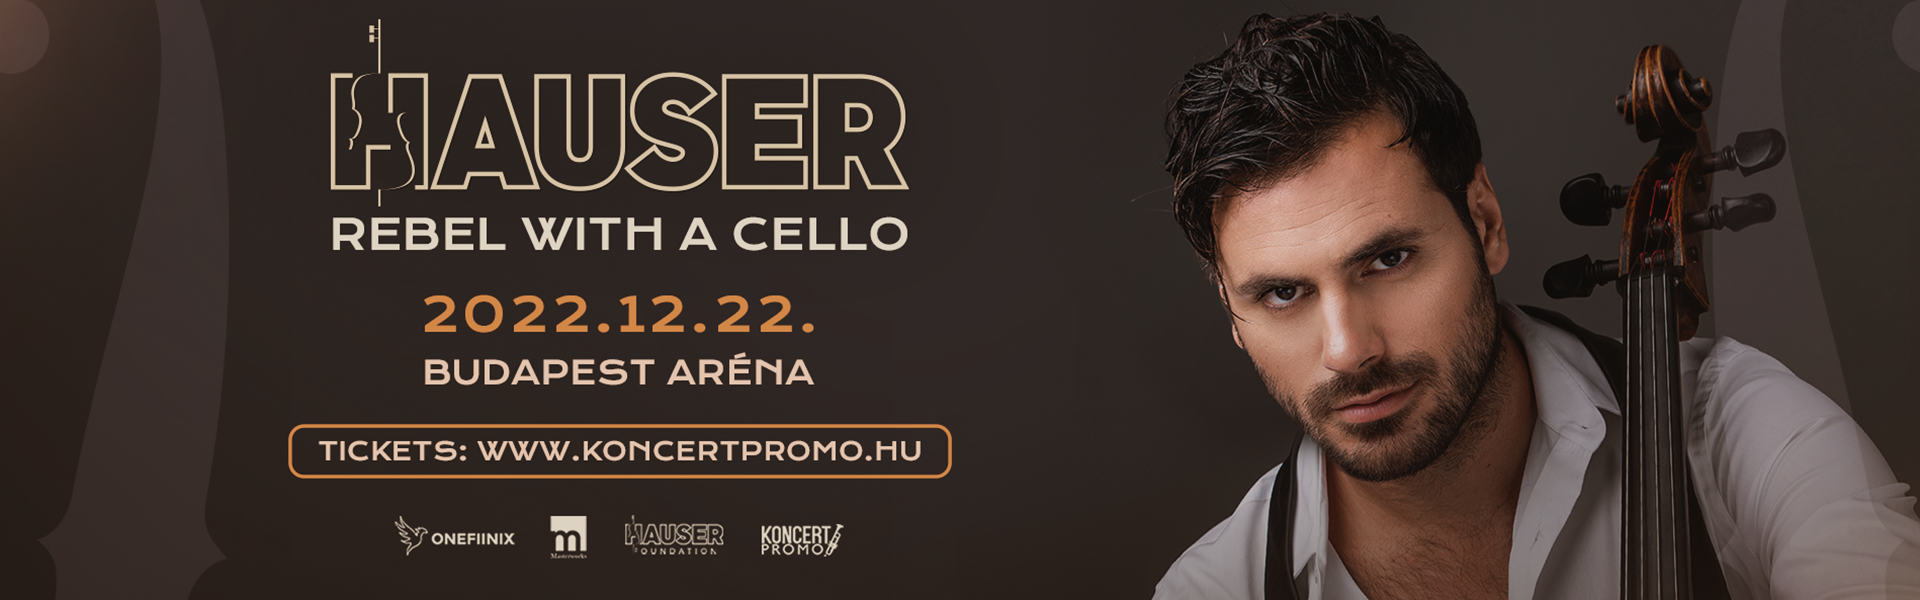 Hauser: “Rebel With A Cello”, Budapest Aréna, 22 December